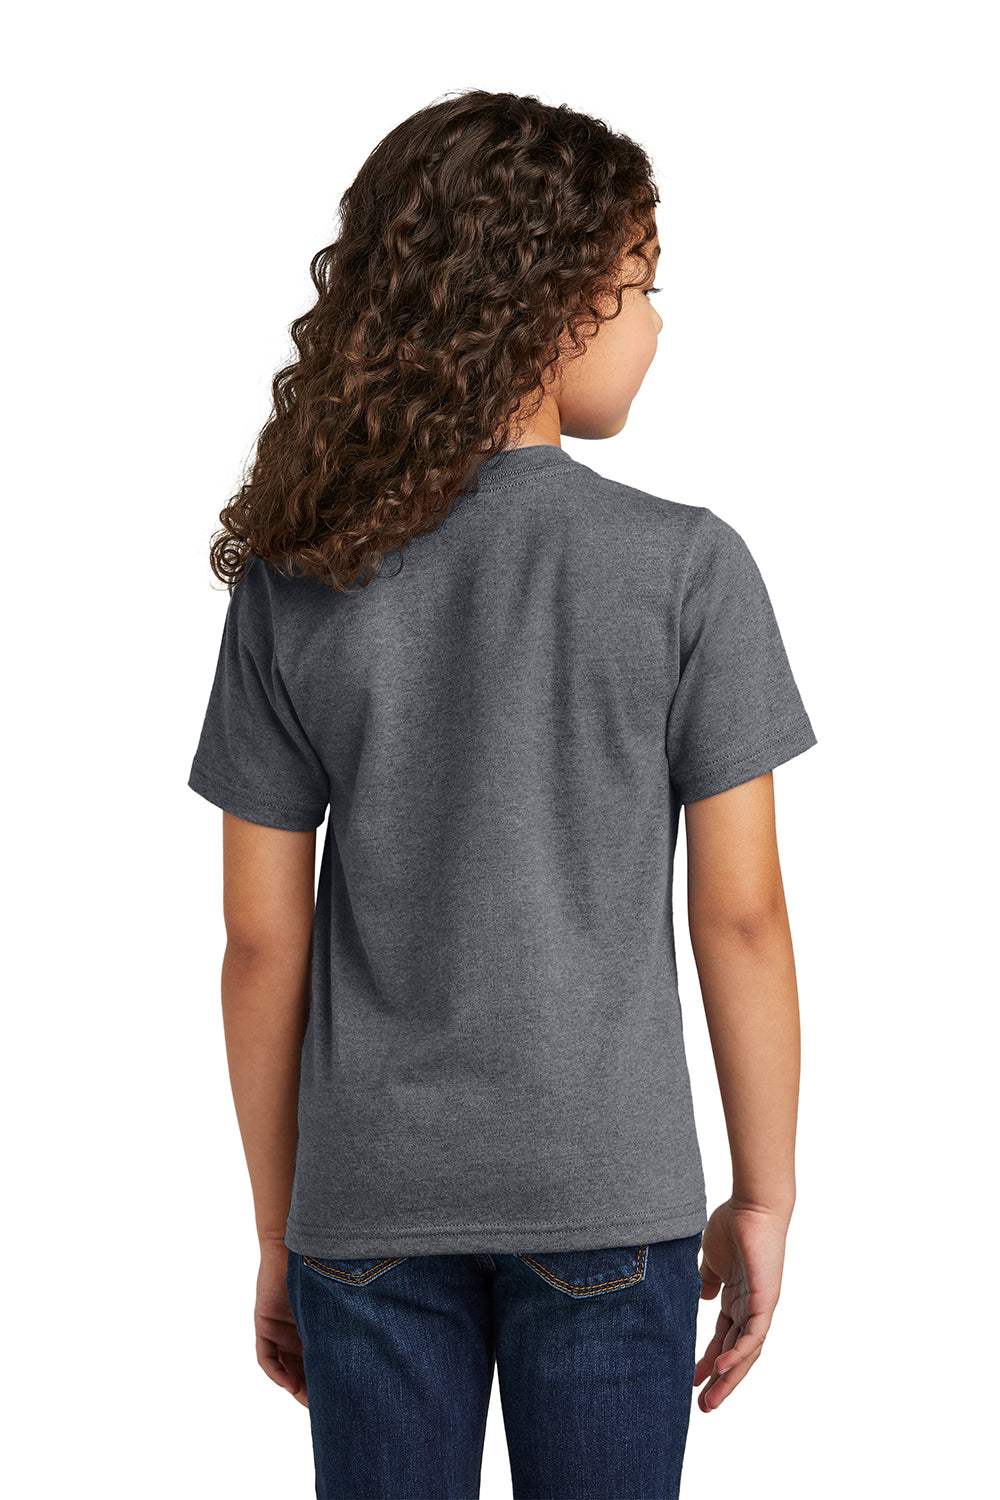 Port & Company PC330Y Youth Short Sleeve Crewneck T-Shirt Heather Graphite Grey Back